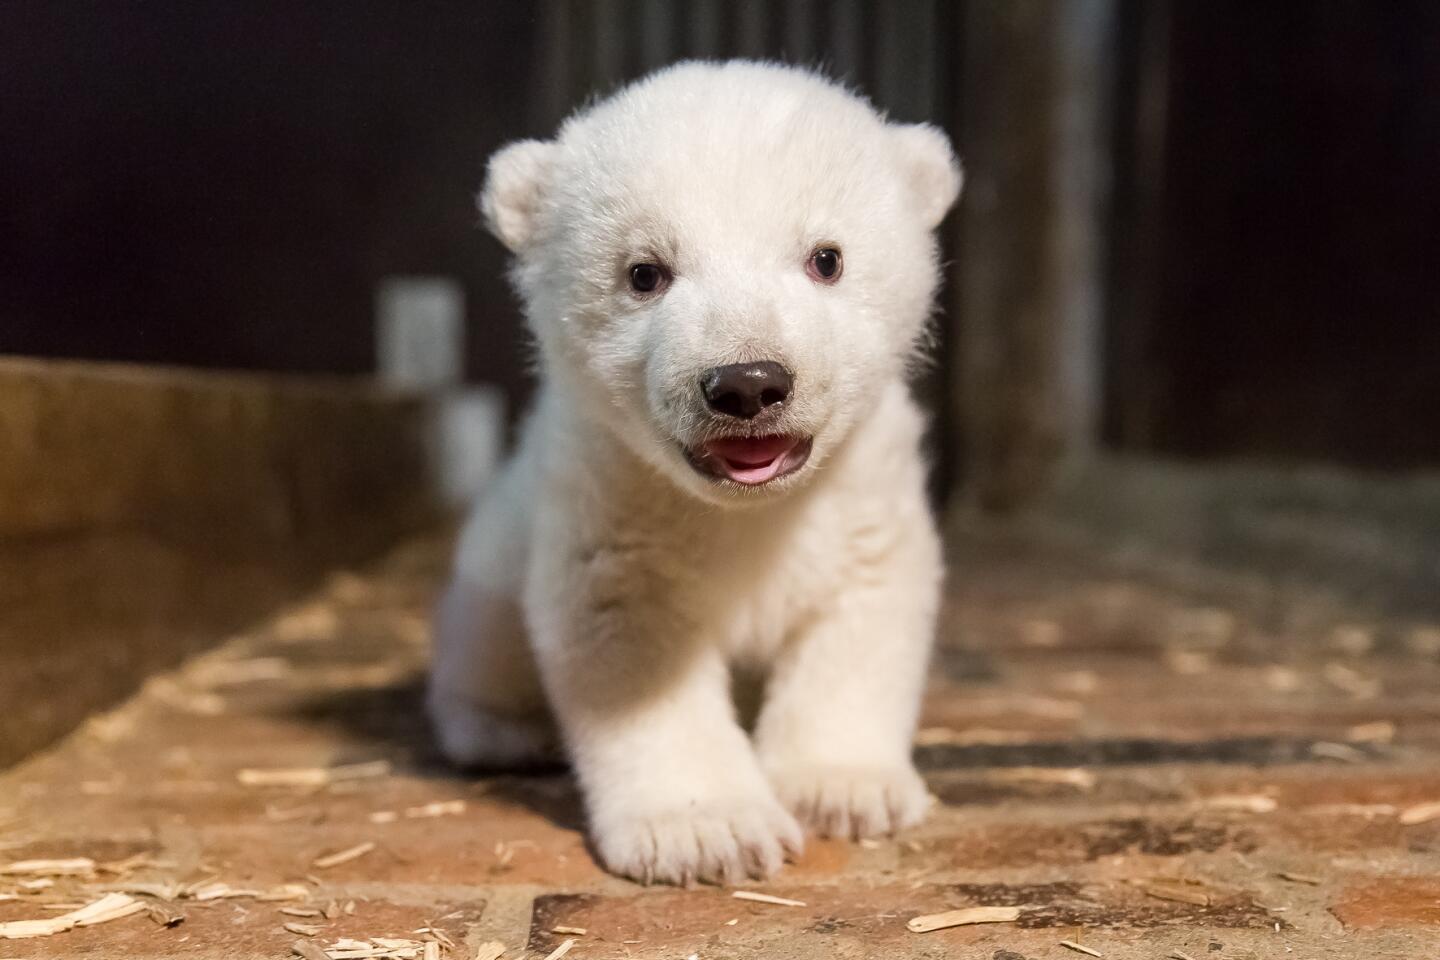 A polar bear cub born Nov. 3, 2016, meets the press at the Tierpark Berlin (Berlin zoo) on Jan. 13, 2017